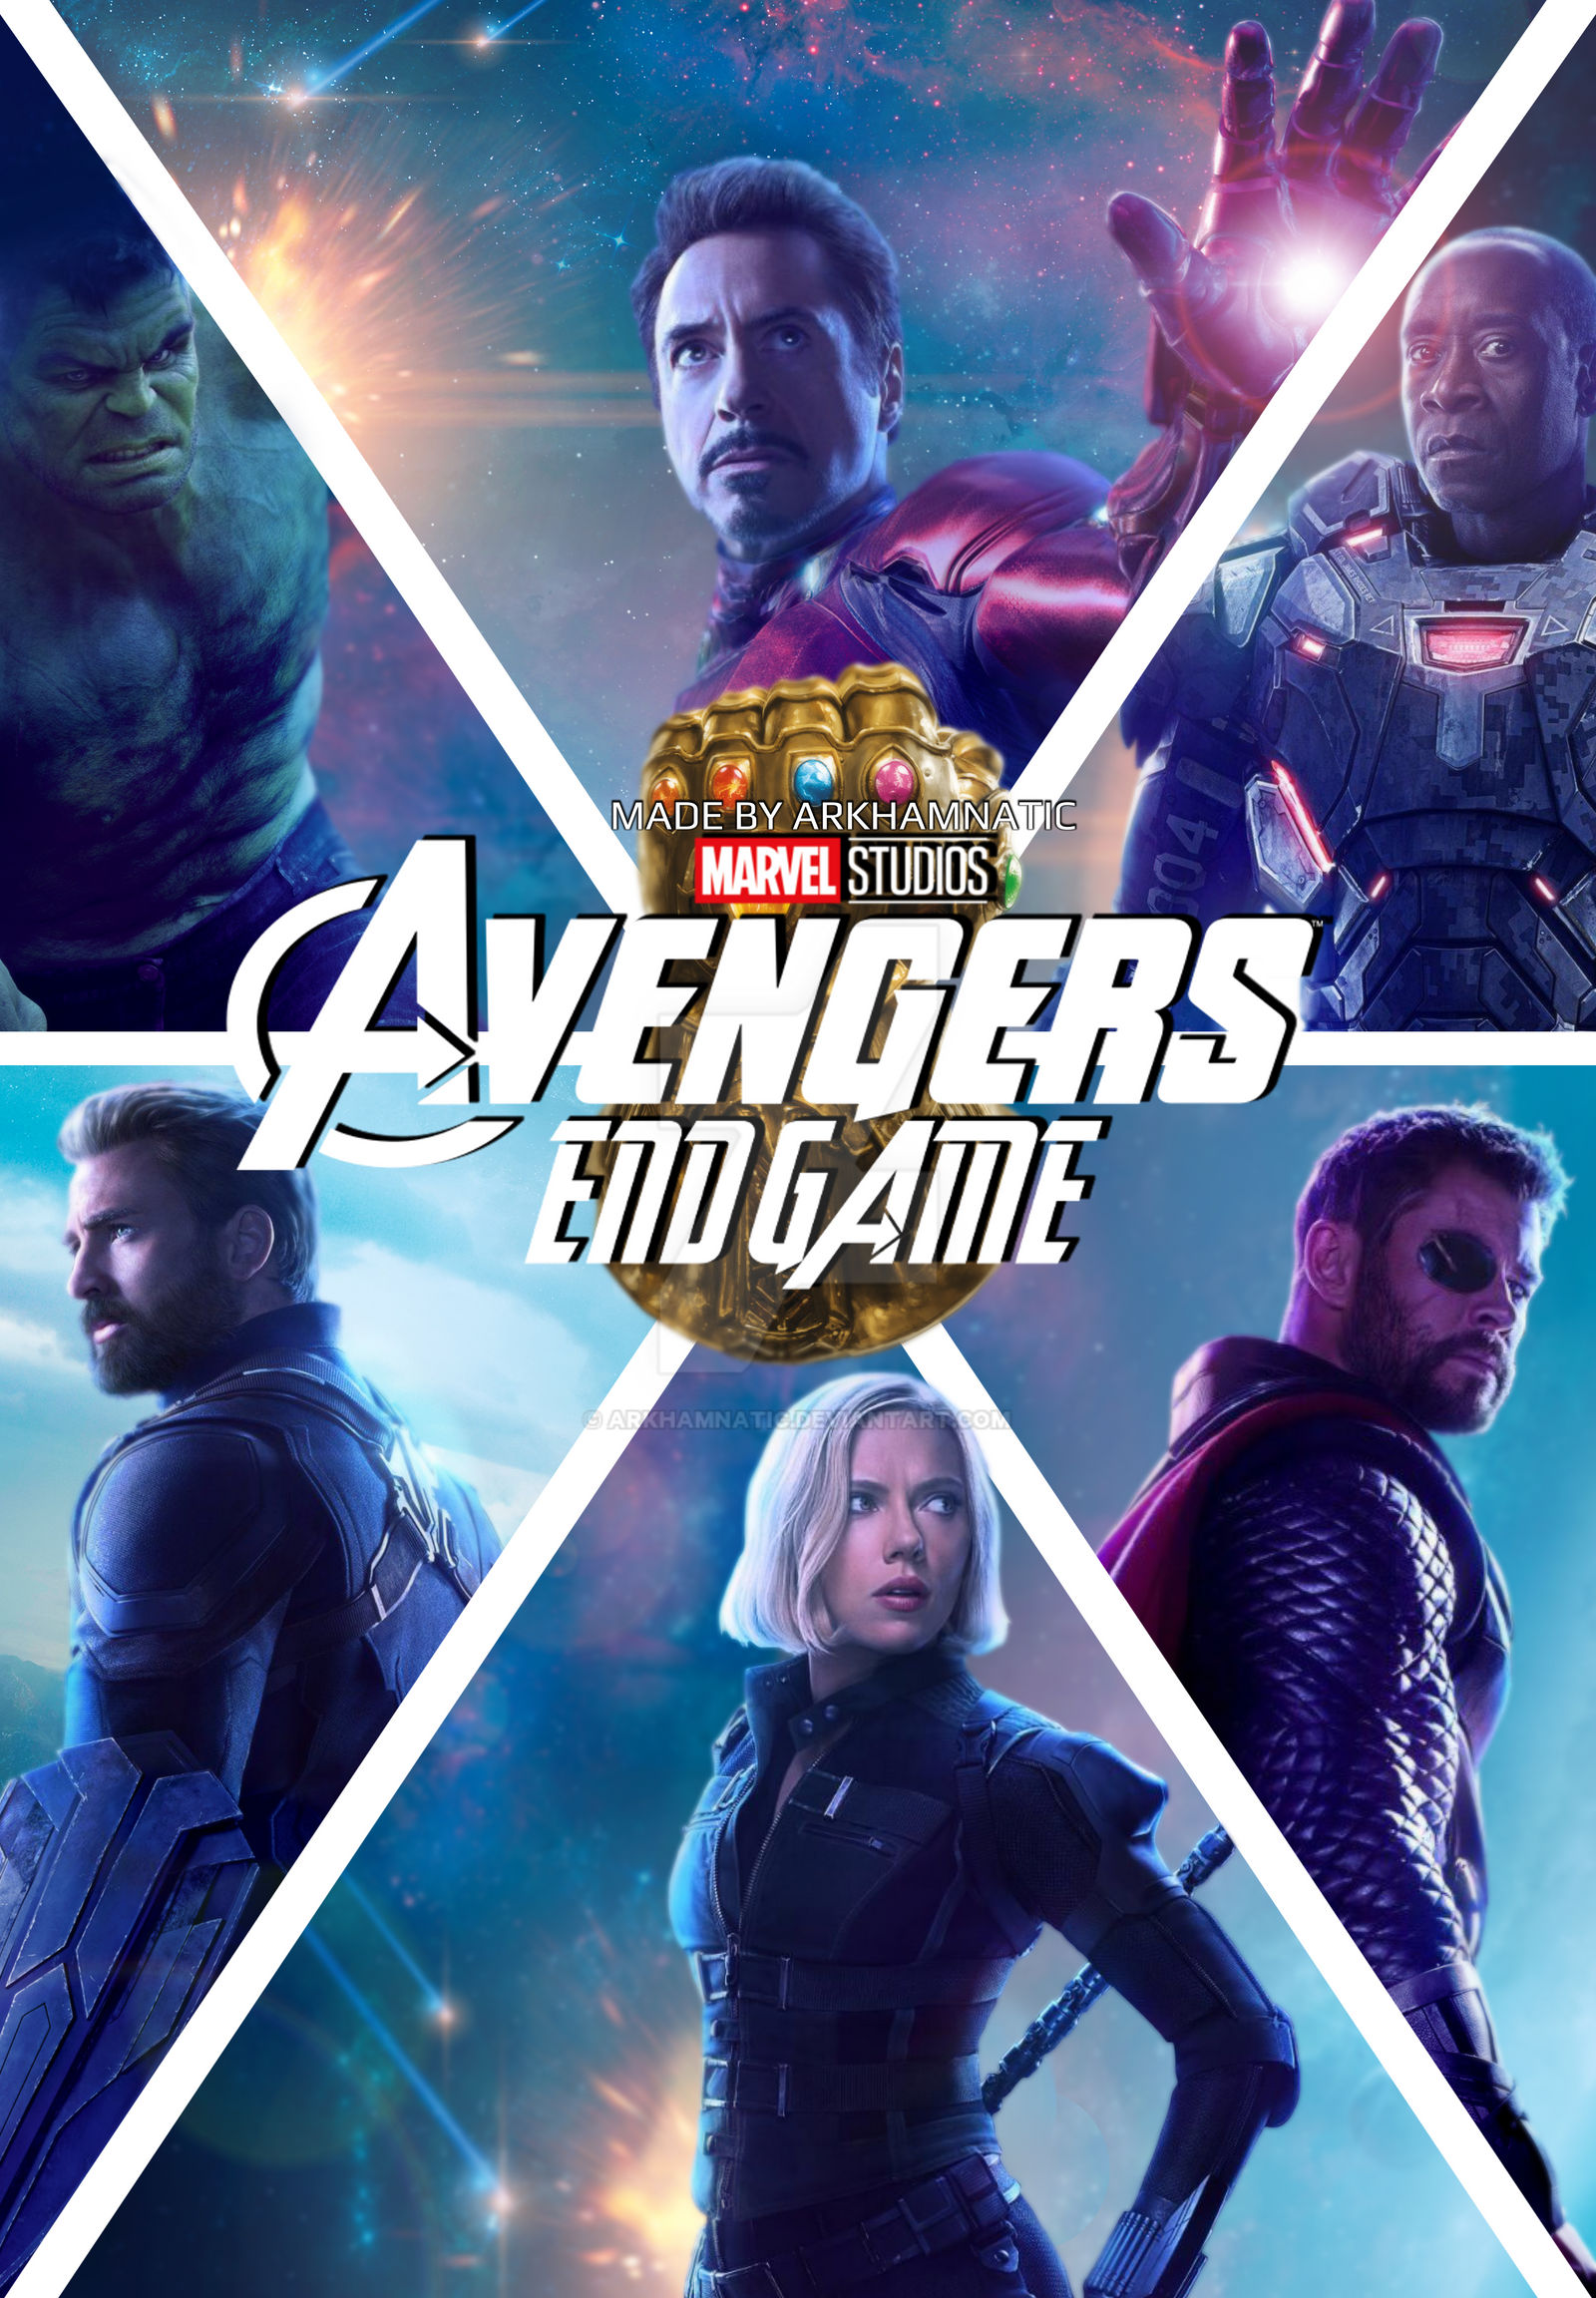 Avengers End Game Movie Poster 1 by jackjack671120 on DeviantArt